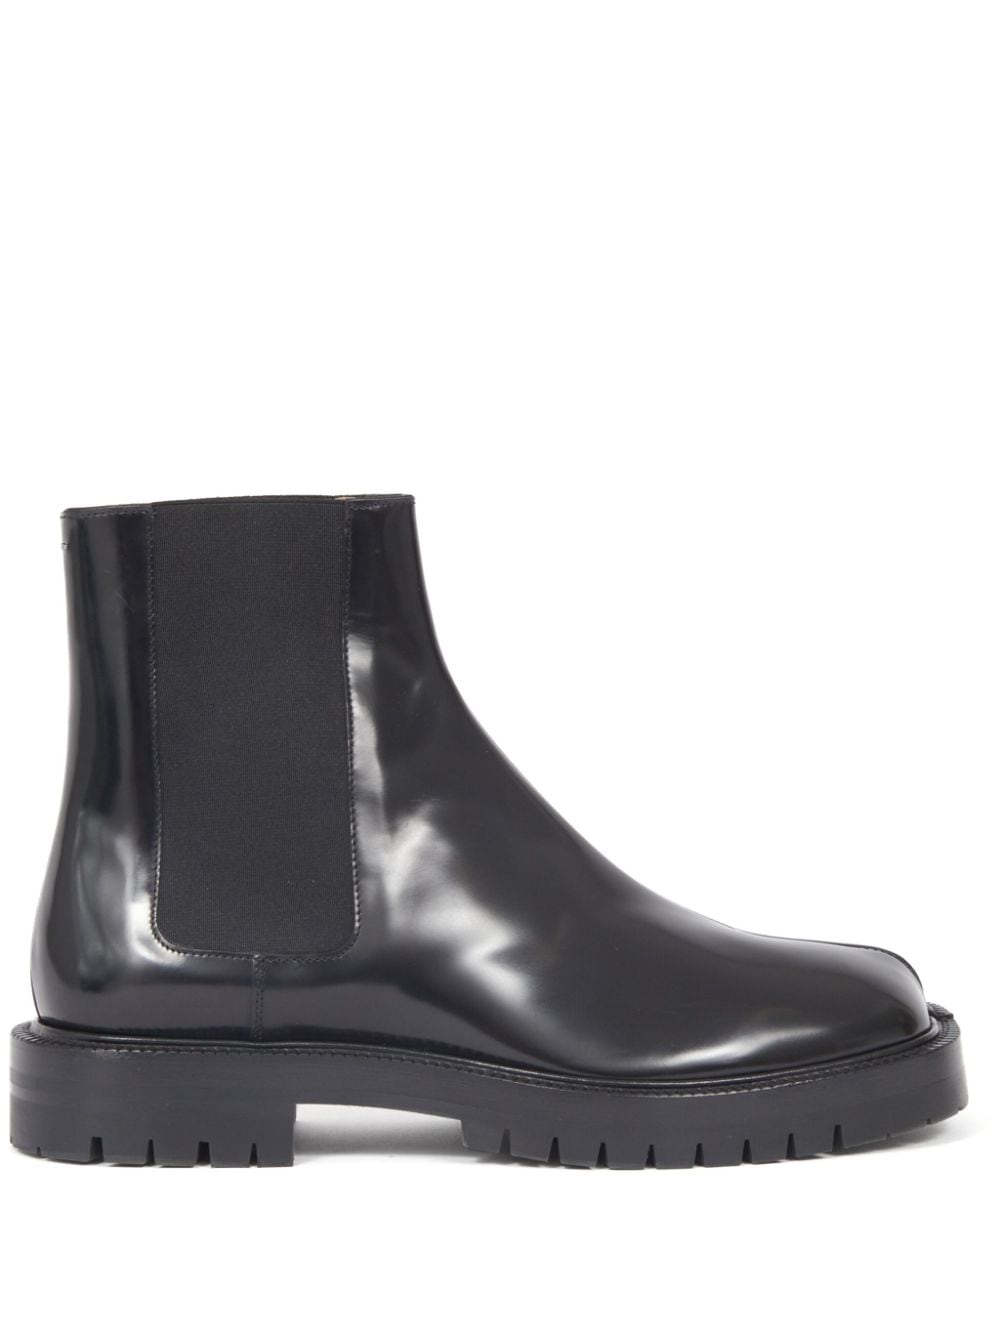 MAISON MARGIELA Men's Tabi Leather Slip-On Boots - Black